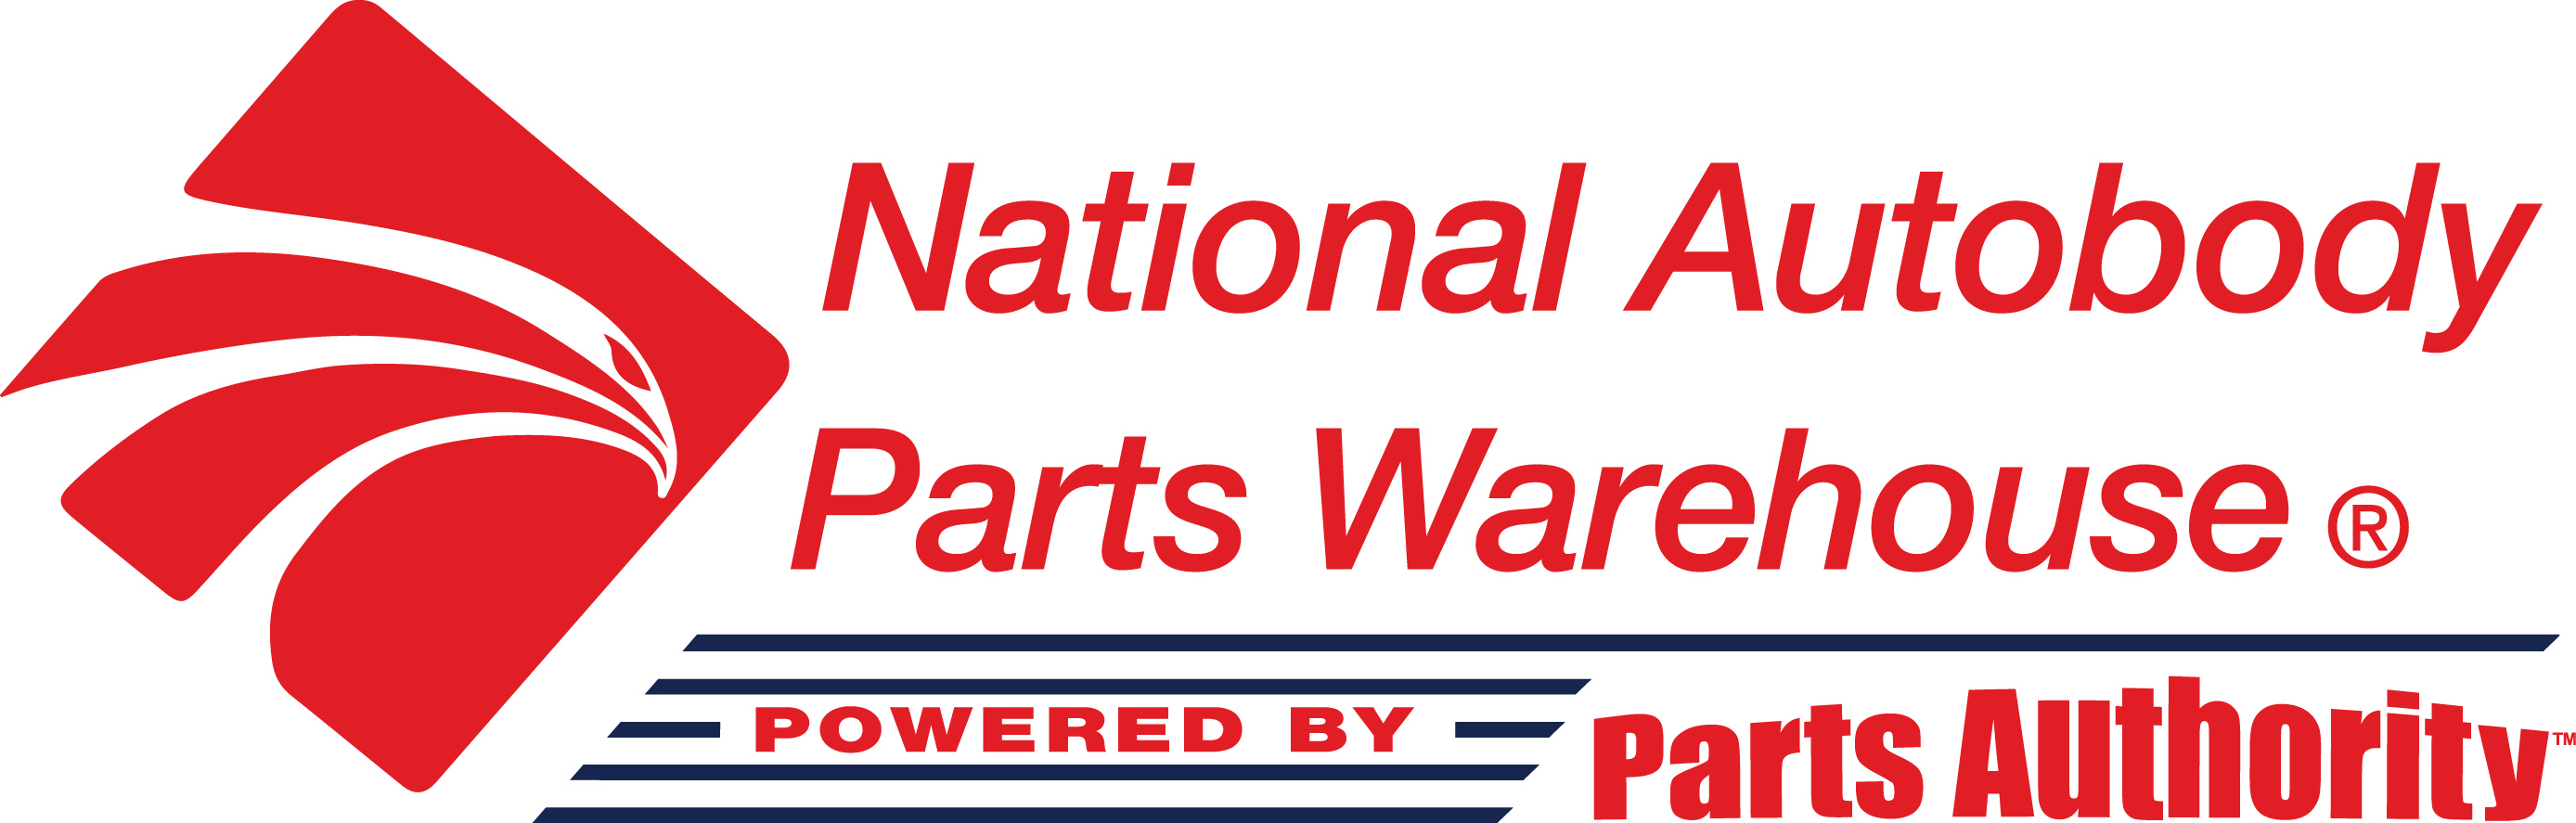 National Autobody Parts Warehouse, Inc.